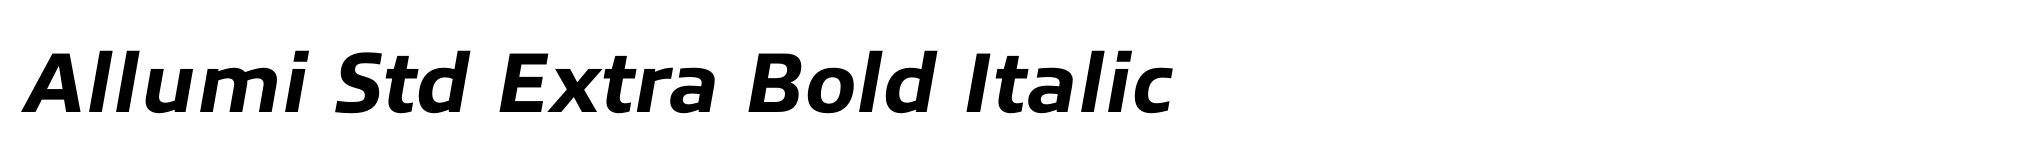 Allumi Std Extra Bold Italic image